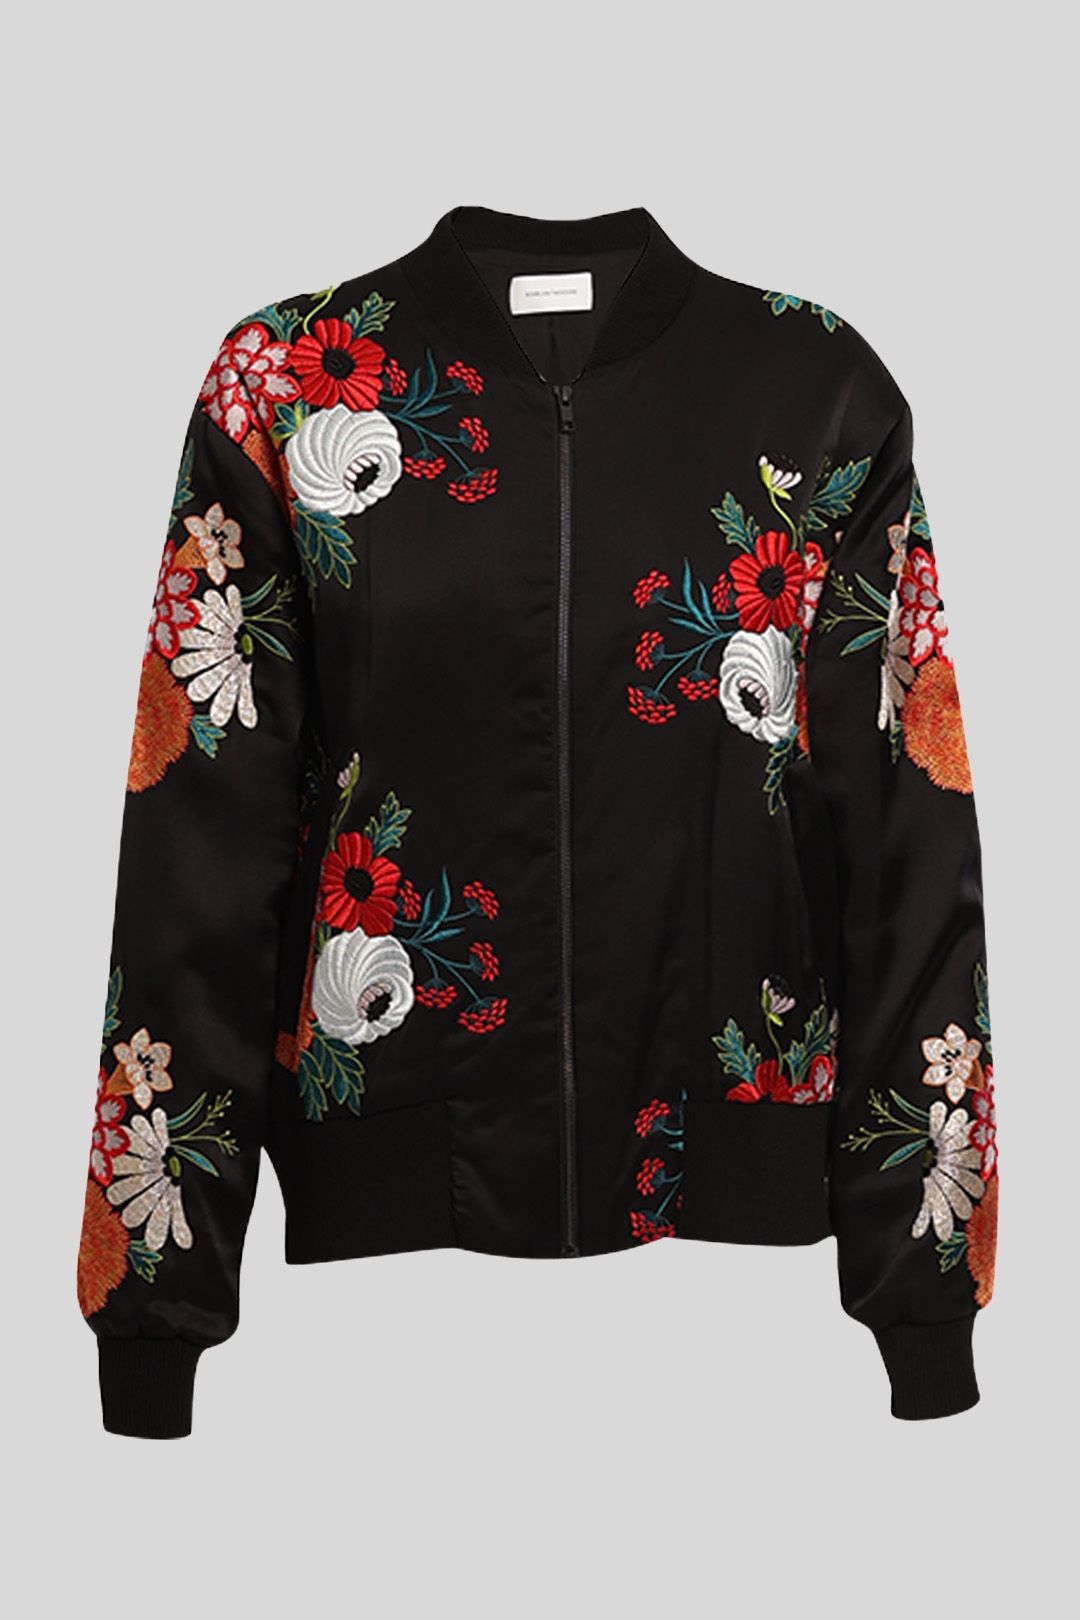 Scanlan Theodore - Embroidery Silk Bomber Jacket